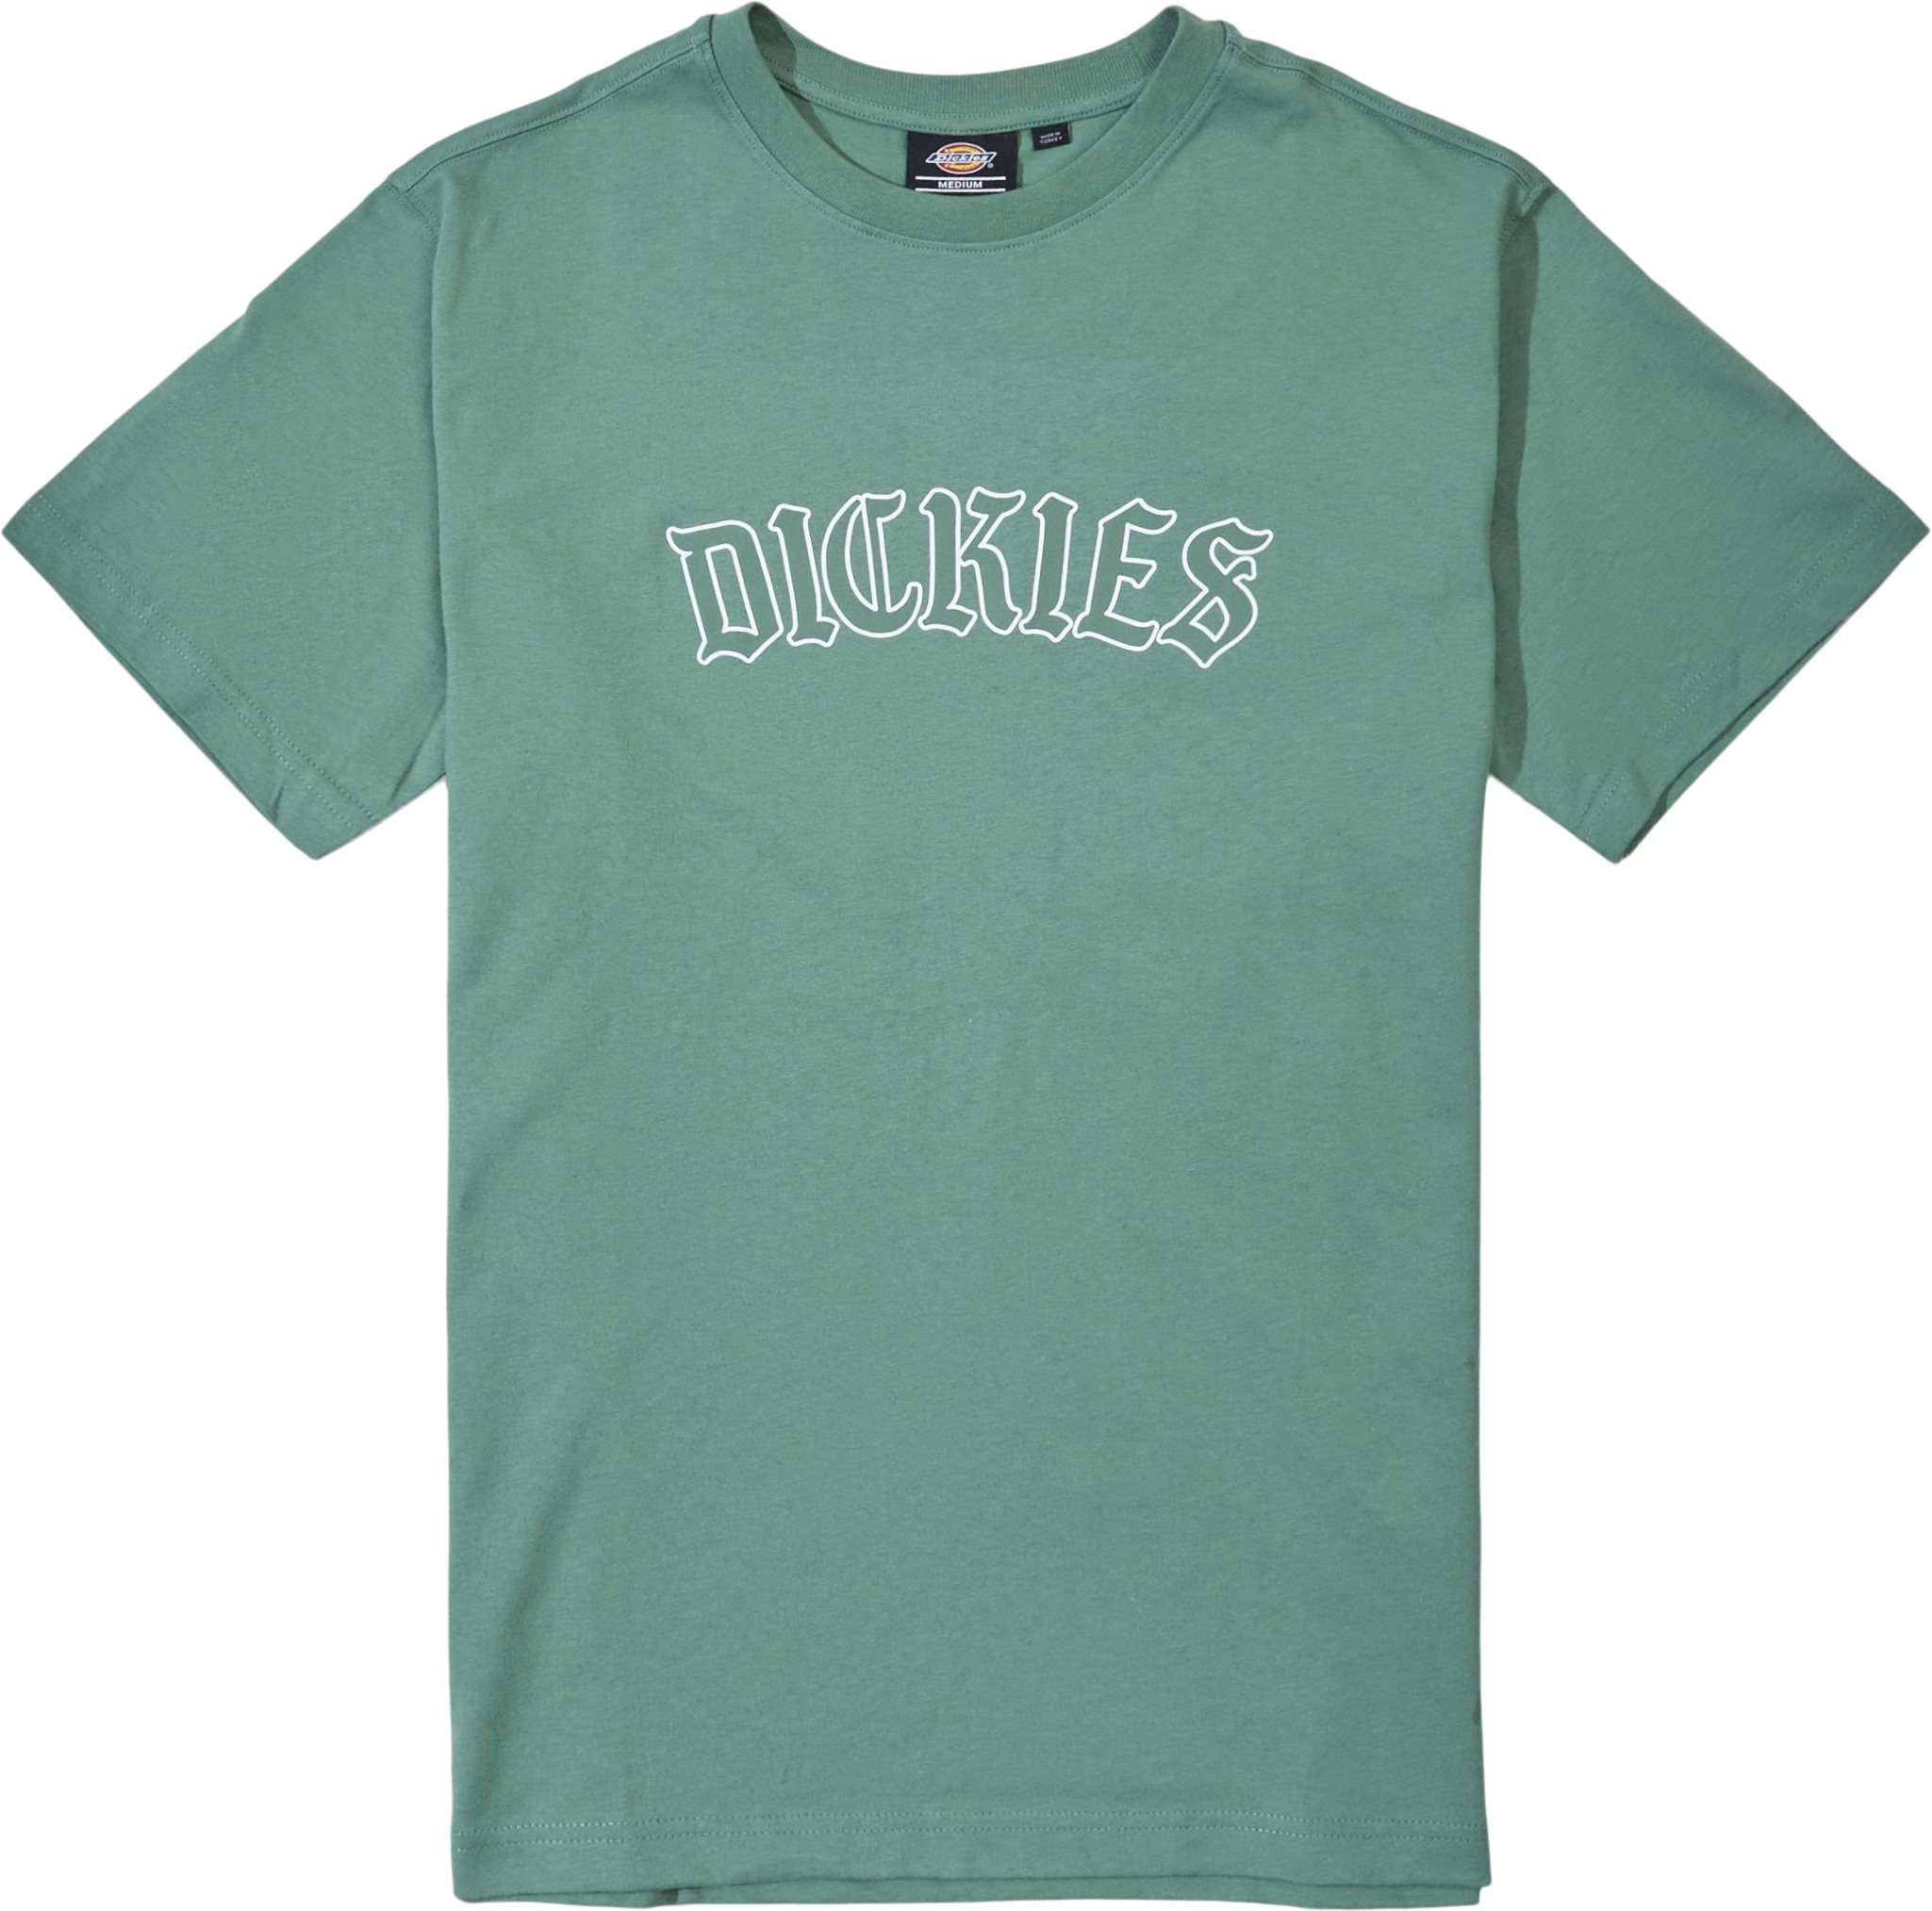 Union Spring - T-shirts - Regular fit - Grön